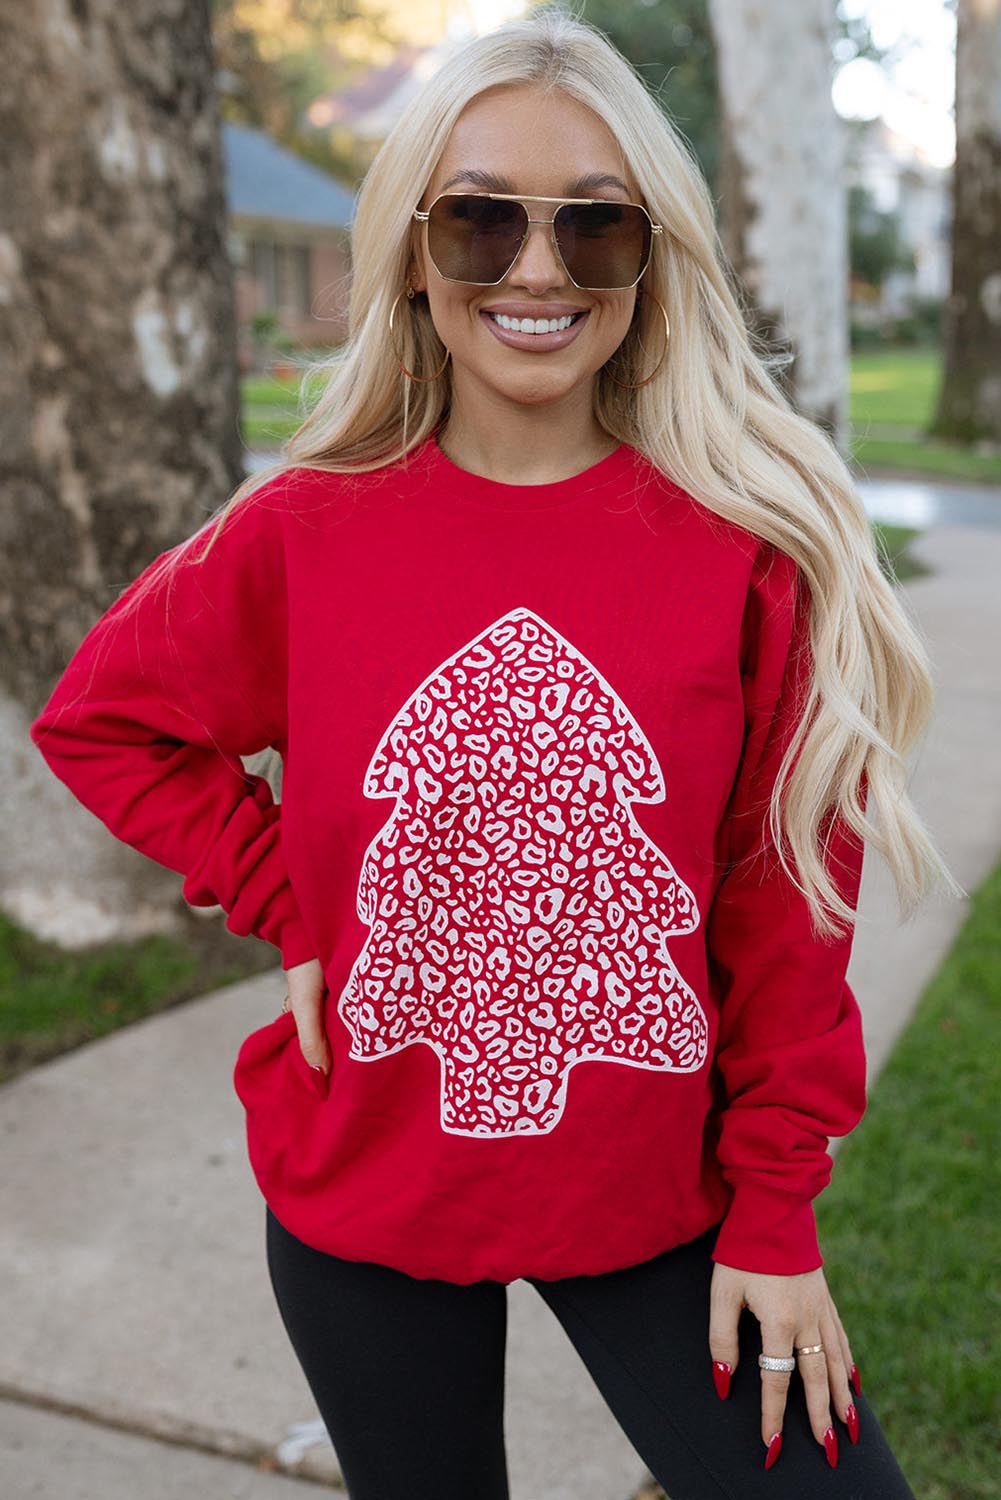 Red Leopard Christmas Tree Print Pullover Graphic Sweatshirt